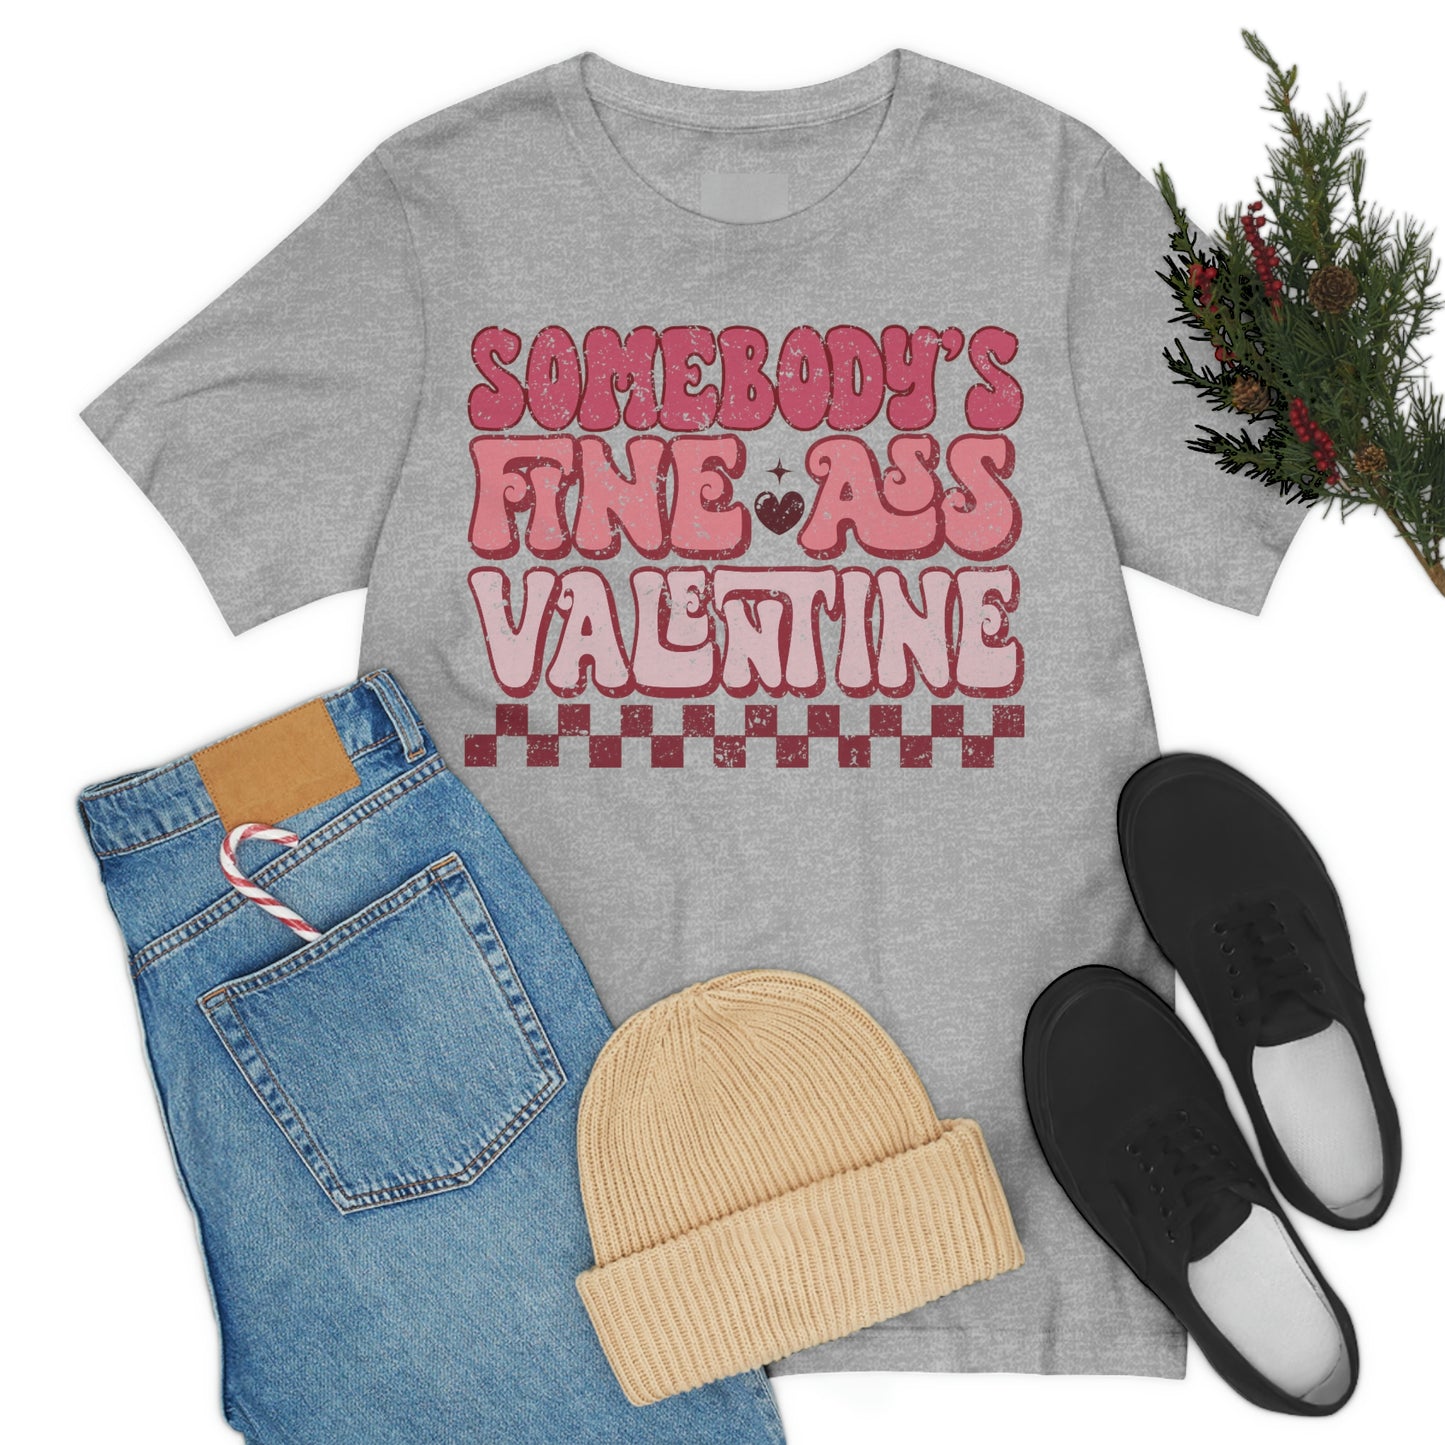 Somebody Fine A** Valentine Adult Unisex Jersey Short Sleeve T-Shirt